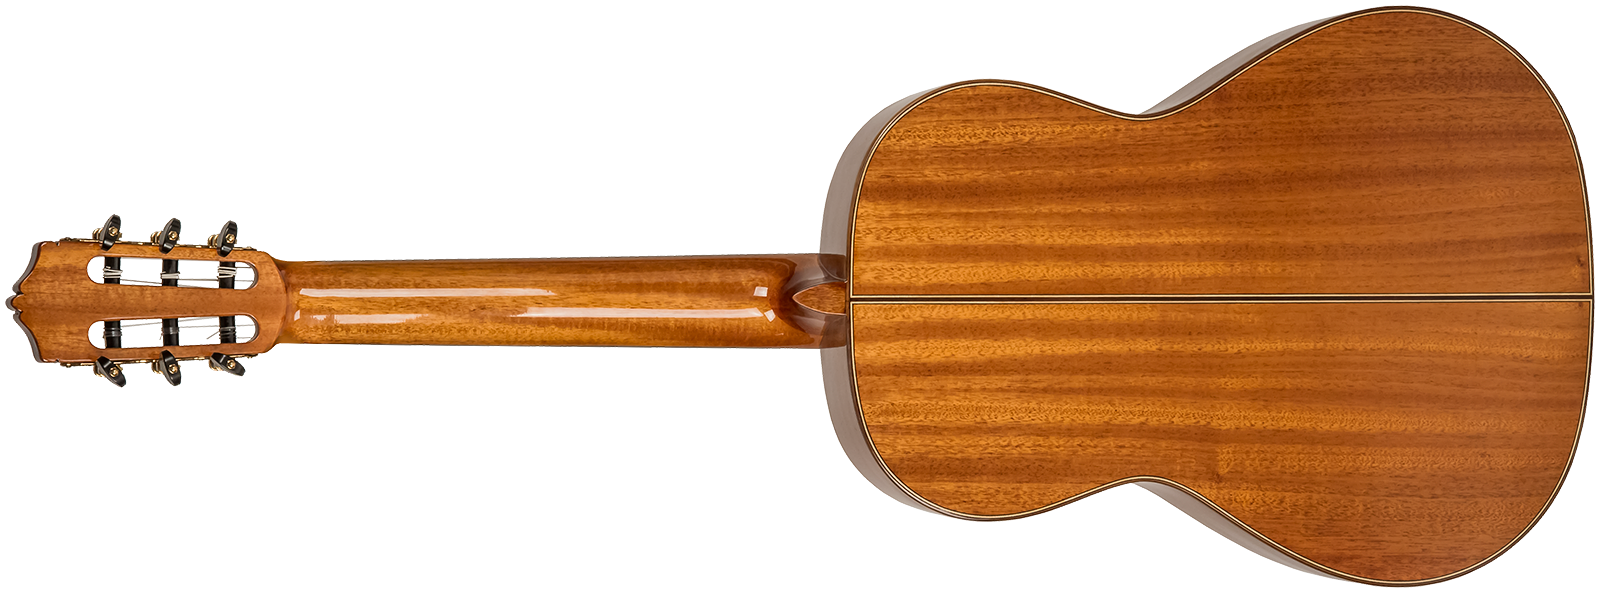 Martinez Mcg 118s Standard 4/4 Epicea Acajou Eb +housse - Natural - Classical guitar 4/4 size - Variation 1